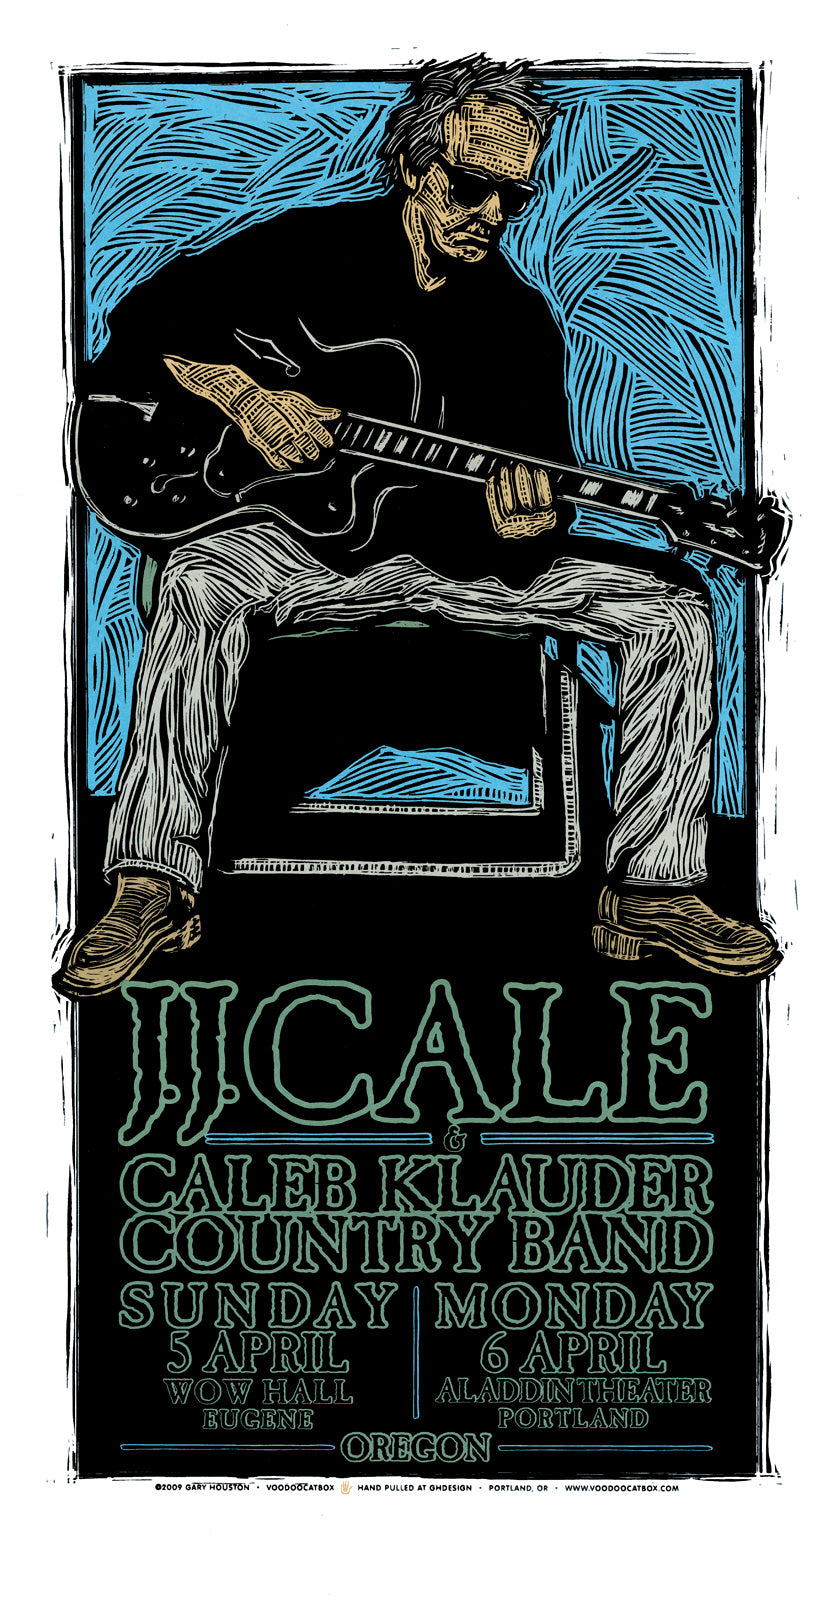 JJ Cale